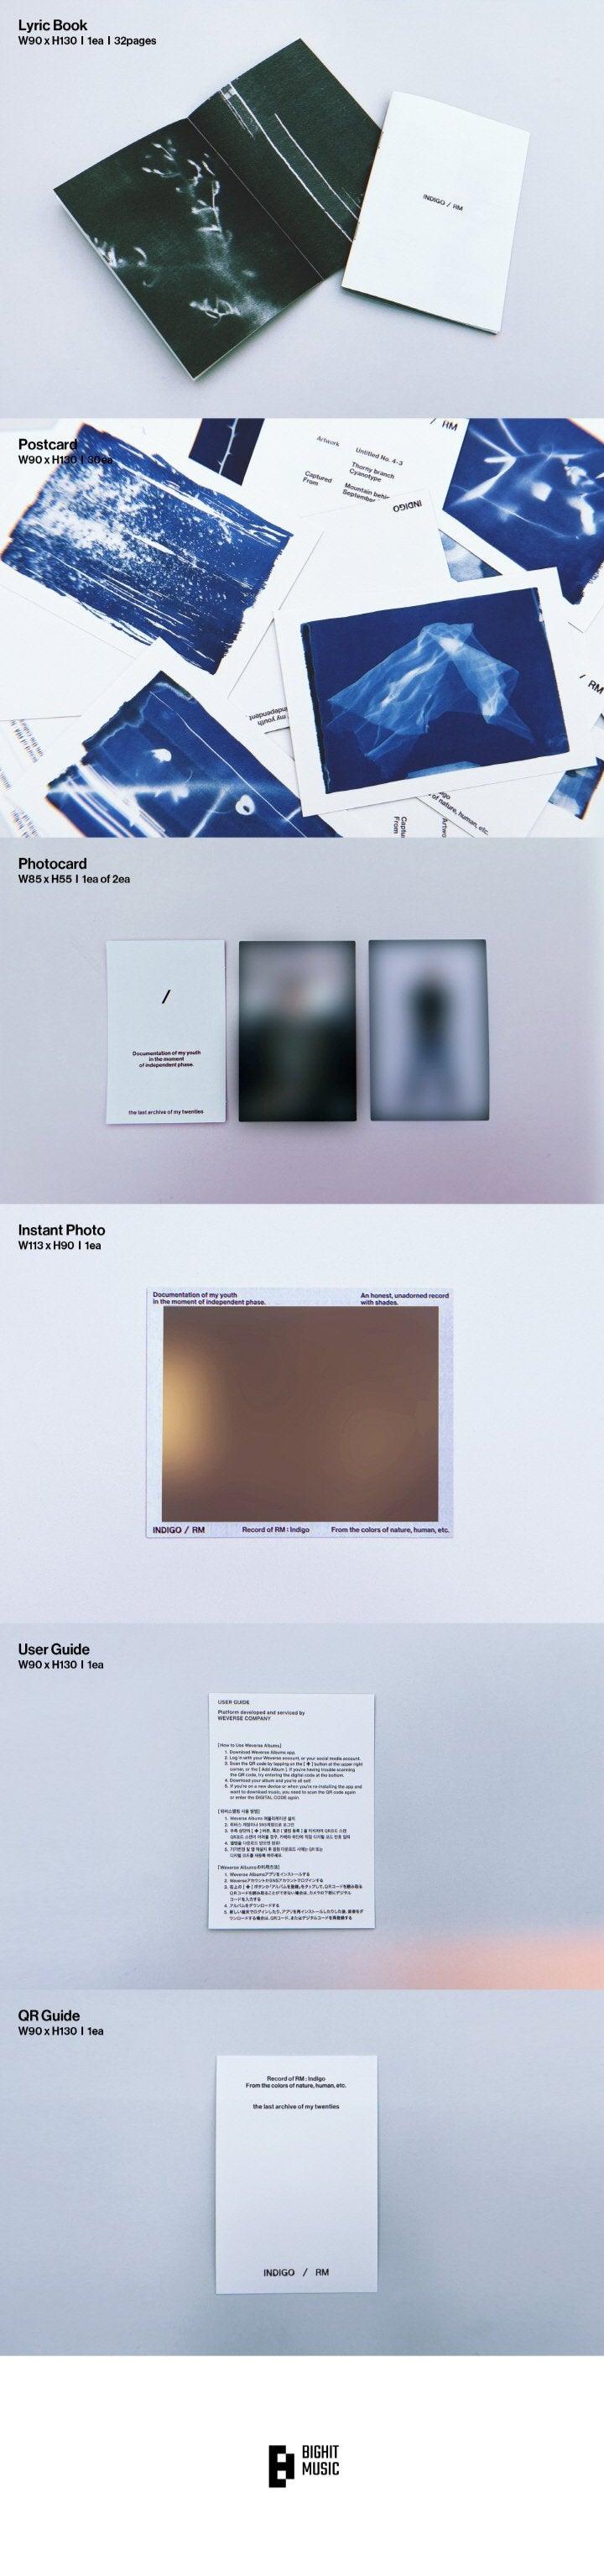 RM (BTS) - Solo Album Vol.1 [INDIGO](Postcard Edition).(Weverse Album) - KAEPJJANG SHOP (캡짱 숍)